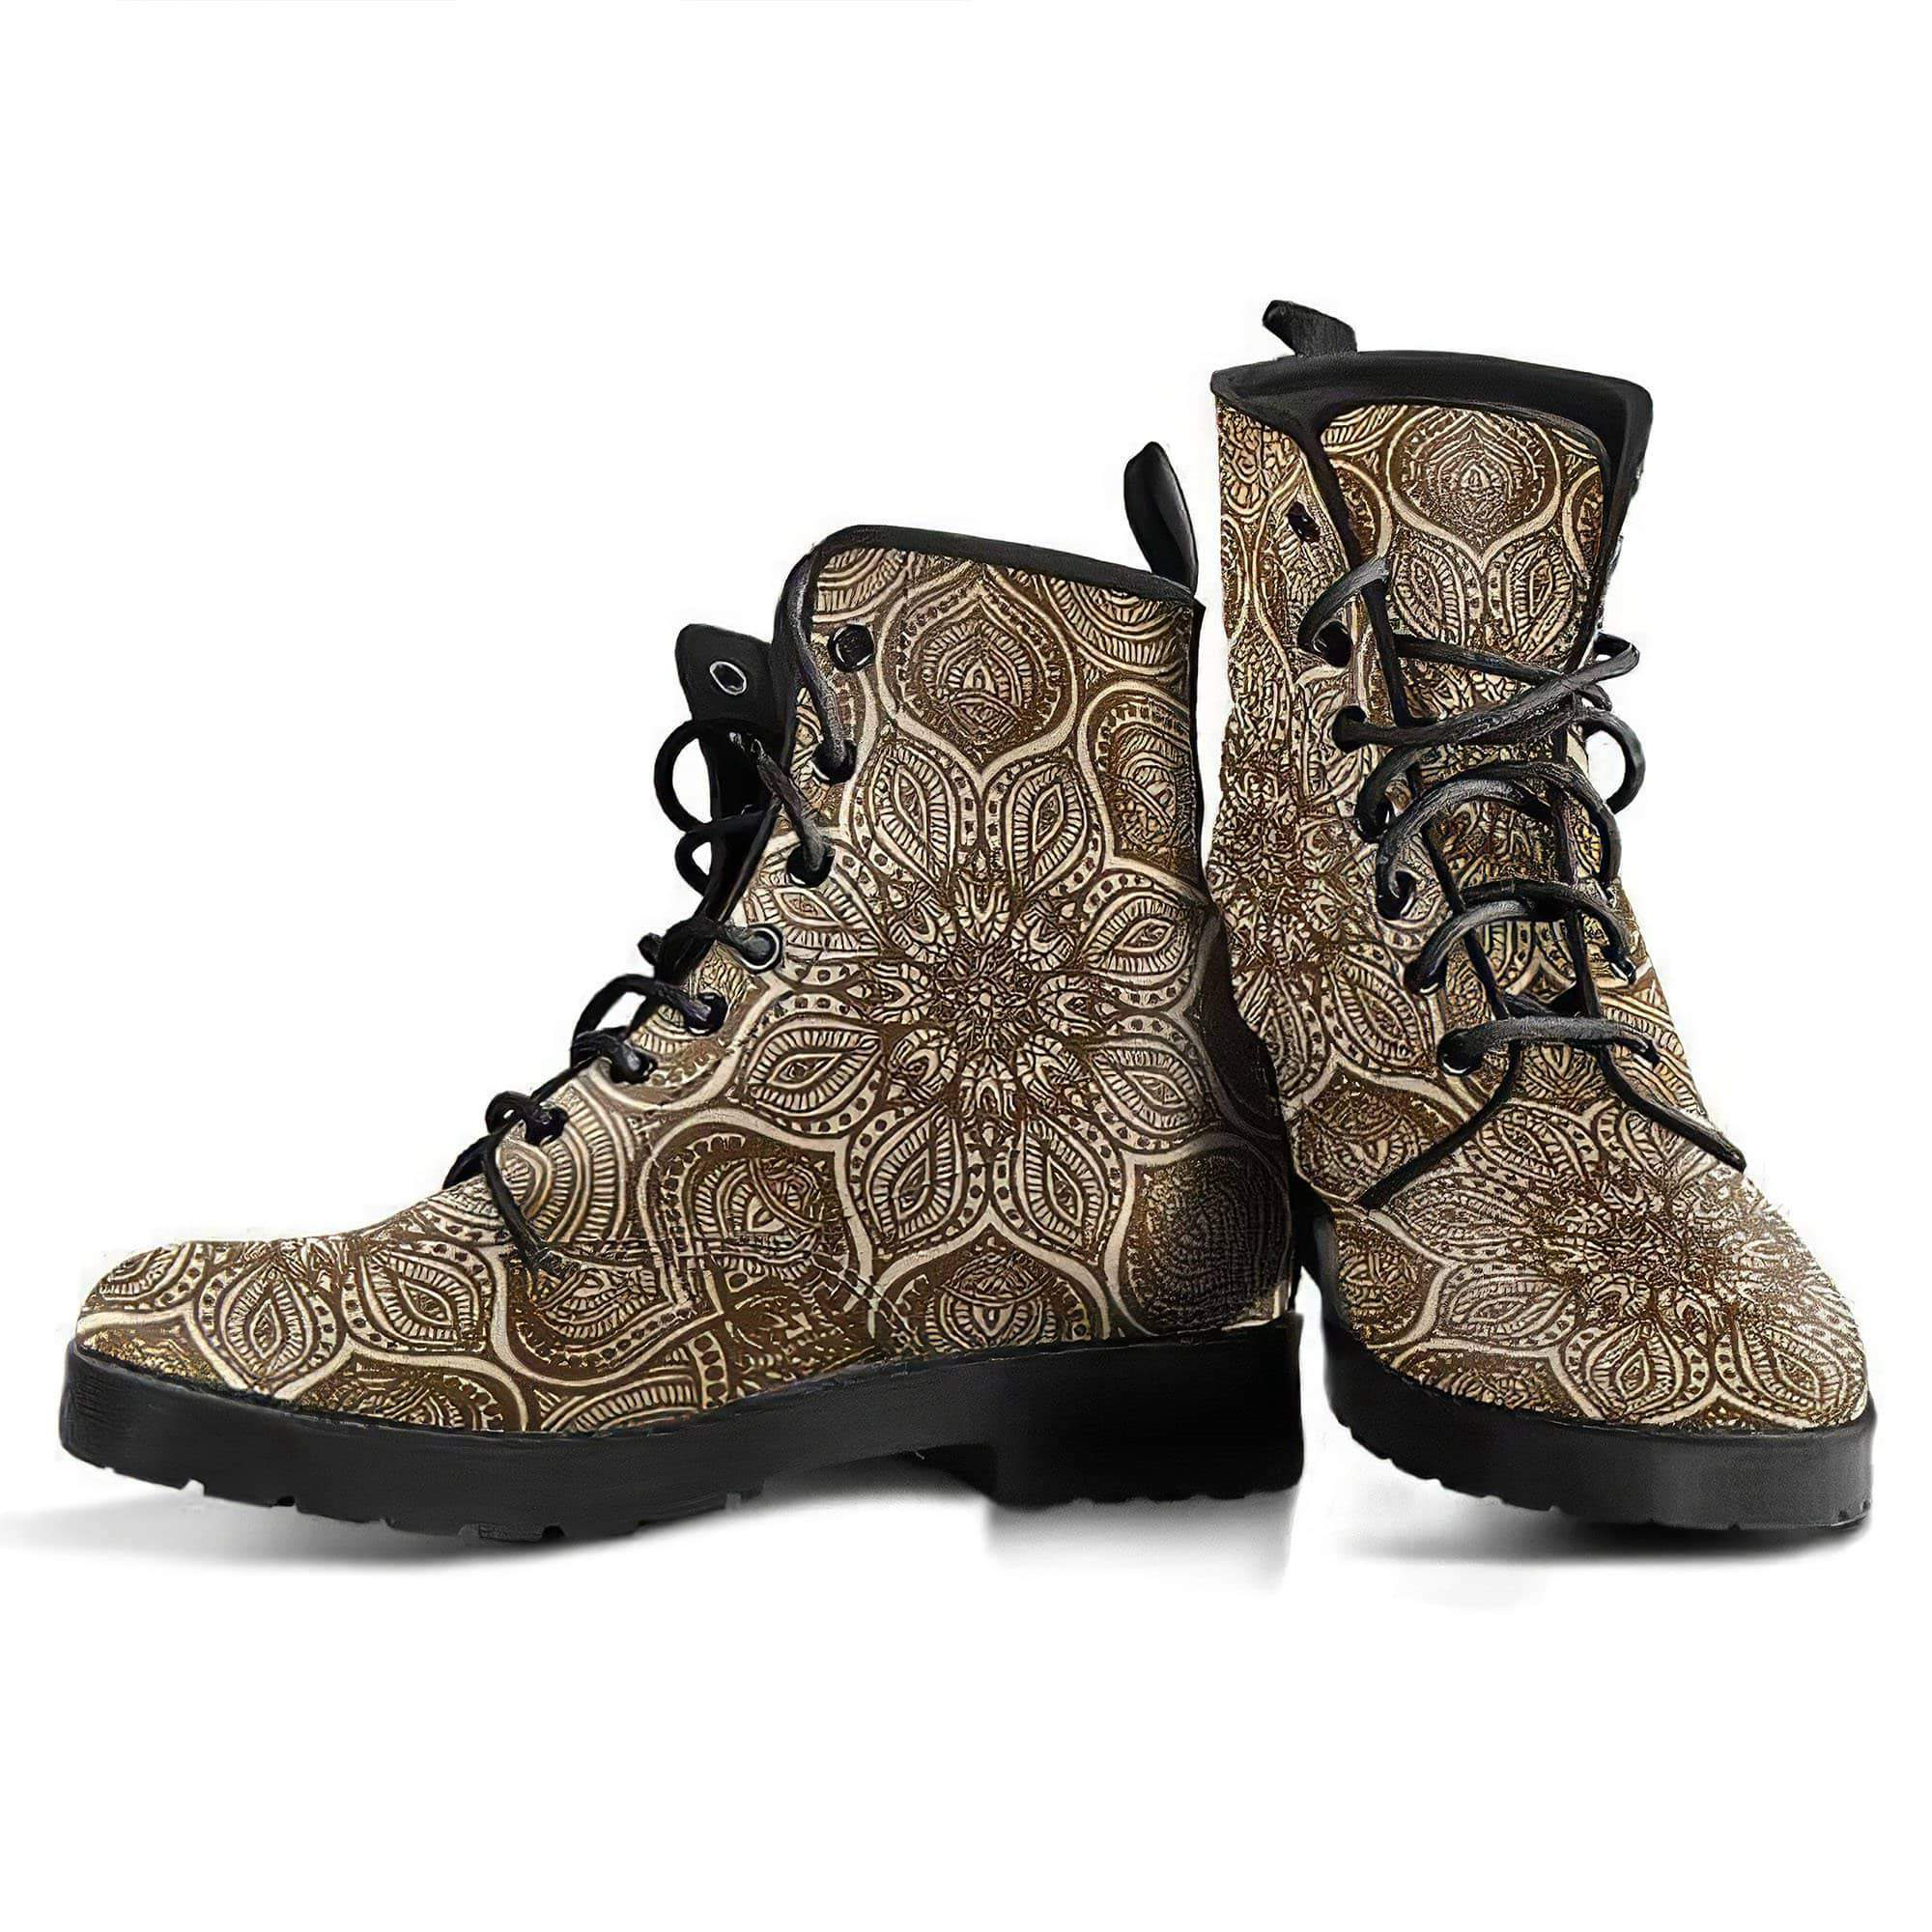 mandala-women-s-leather-boots-women-s-leather-boots-12051908395069.jpg